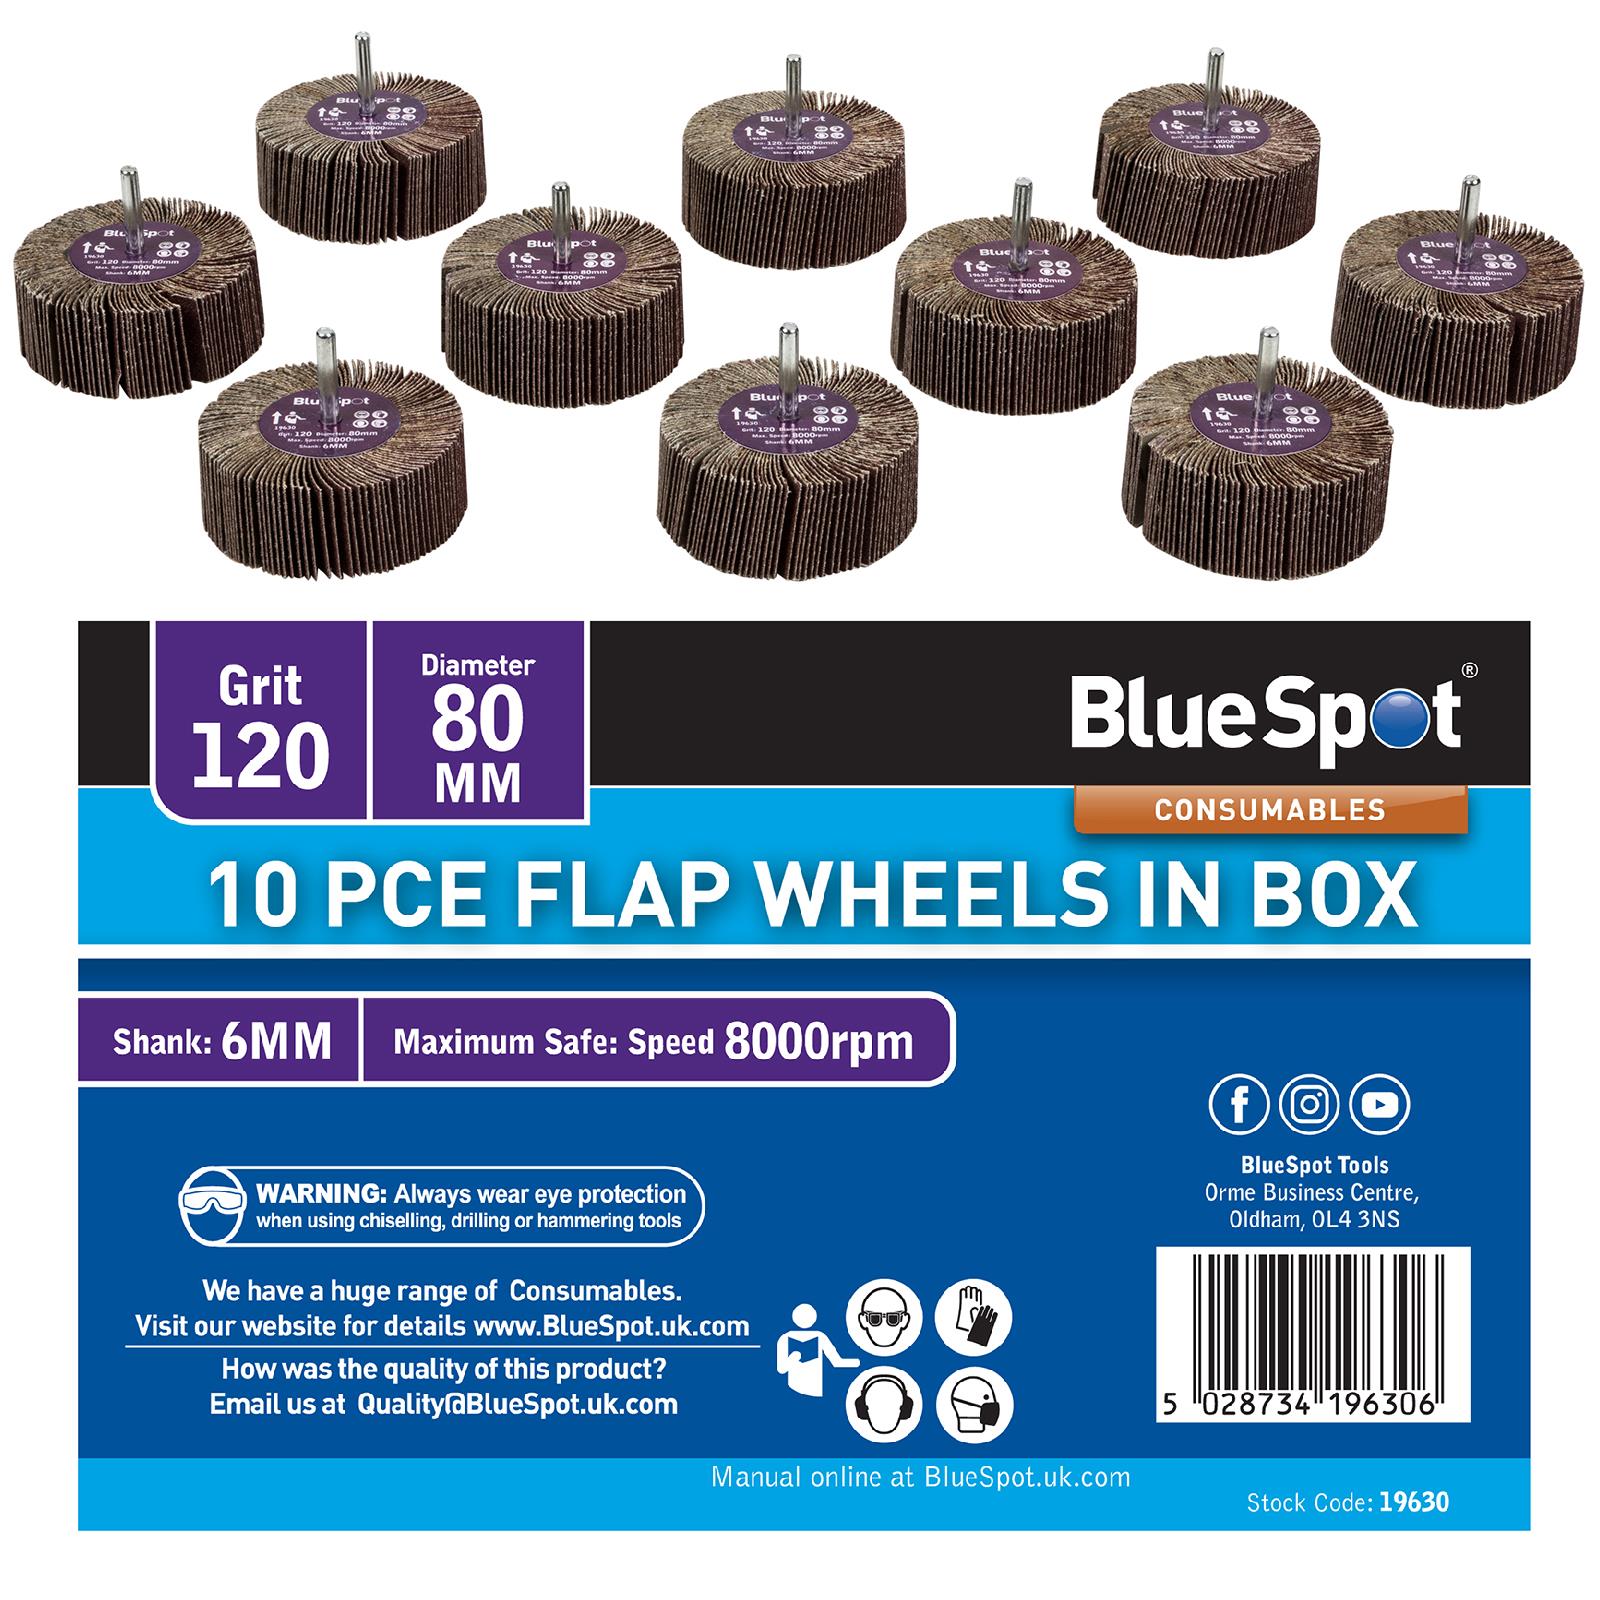 BlueSpot Flap Wheels In Box 10 Pieces 120 Grit 80mm